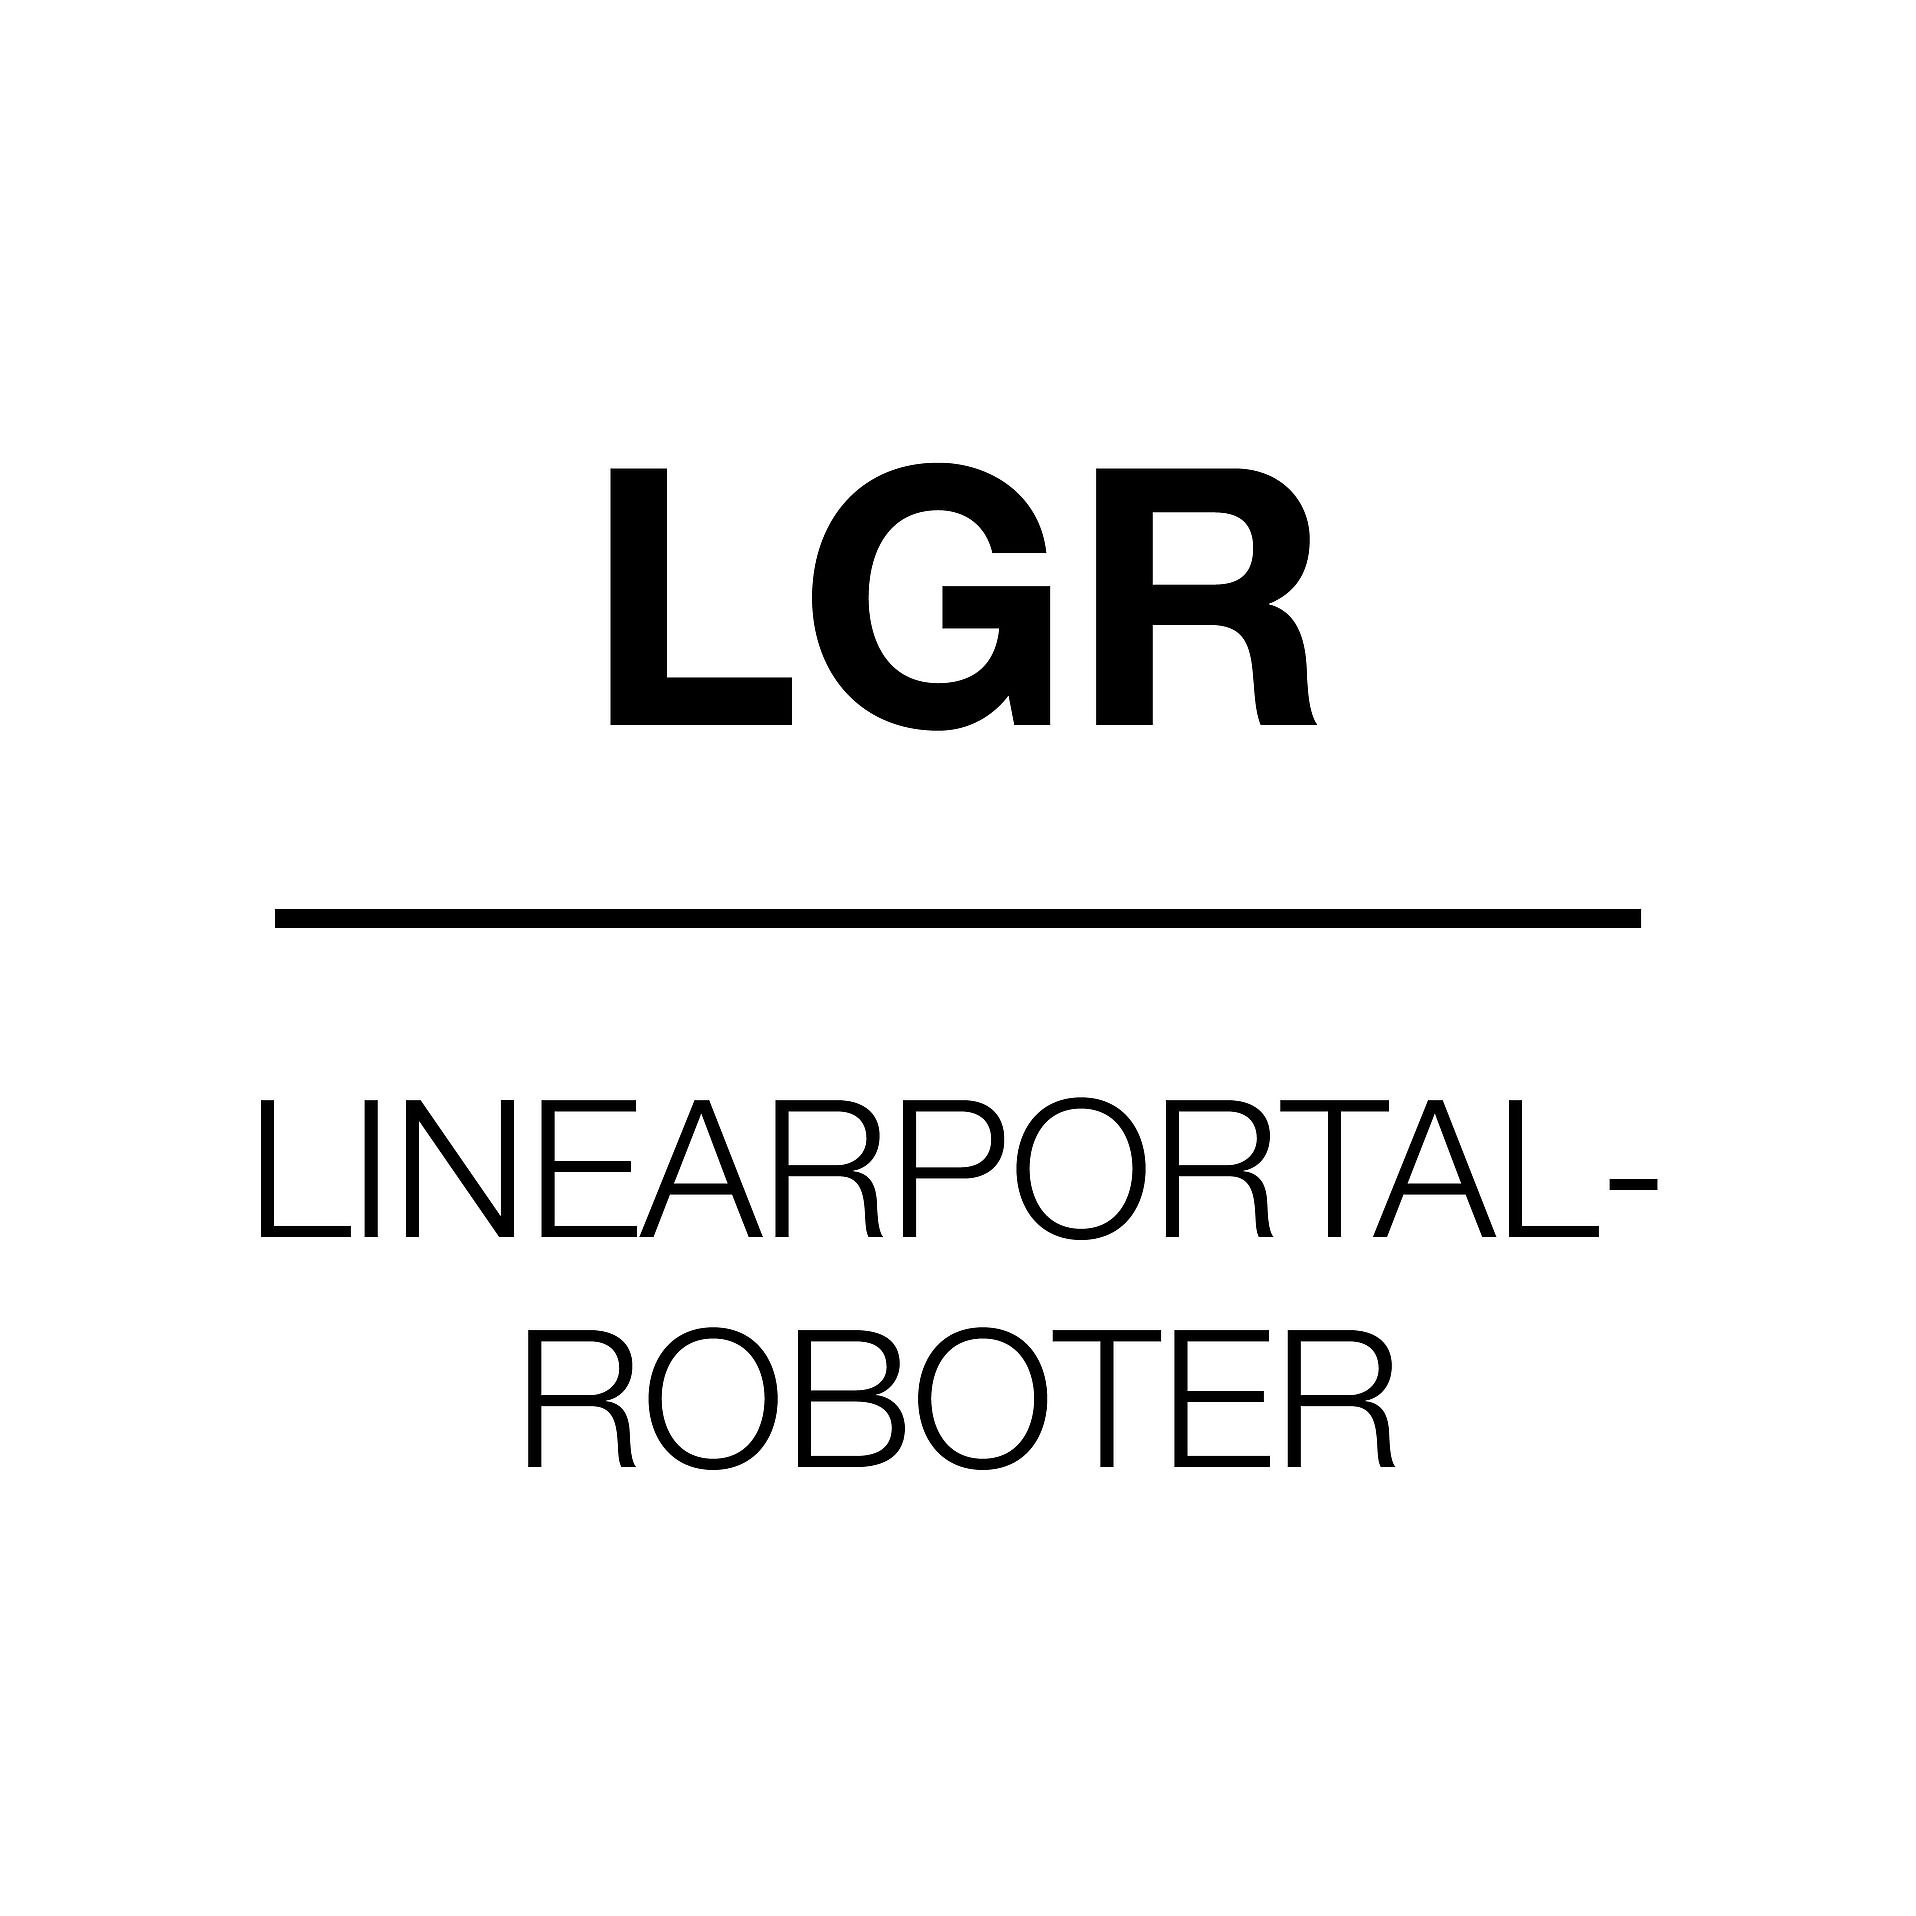 Linearportalroboter LGR